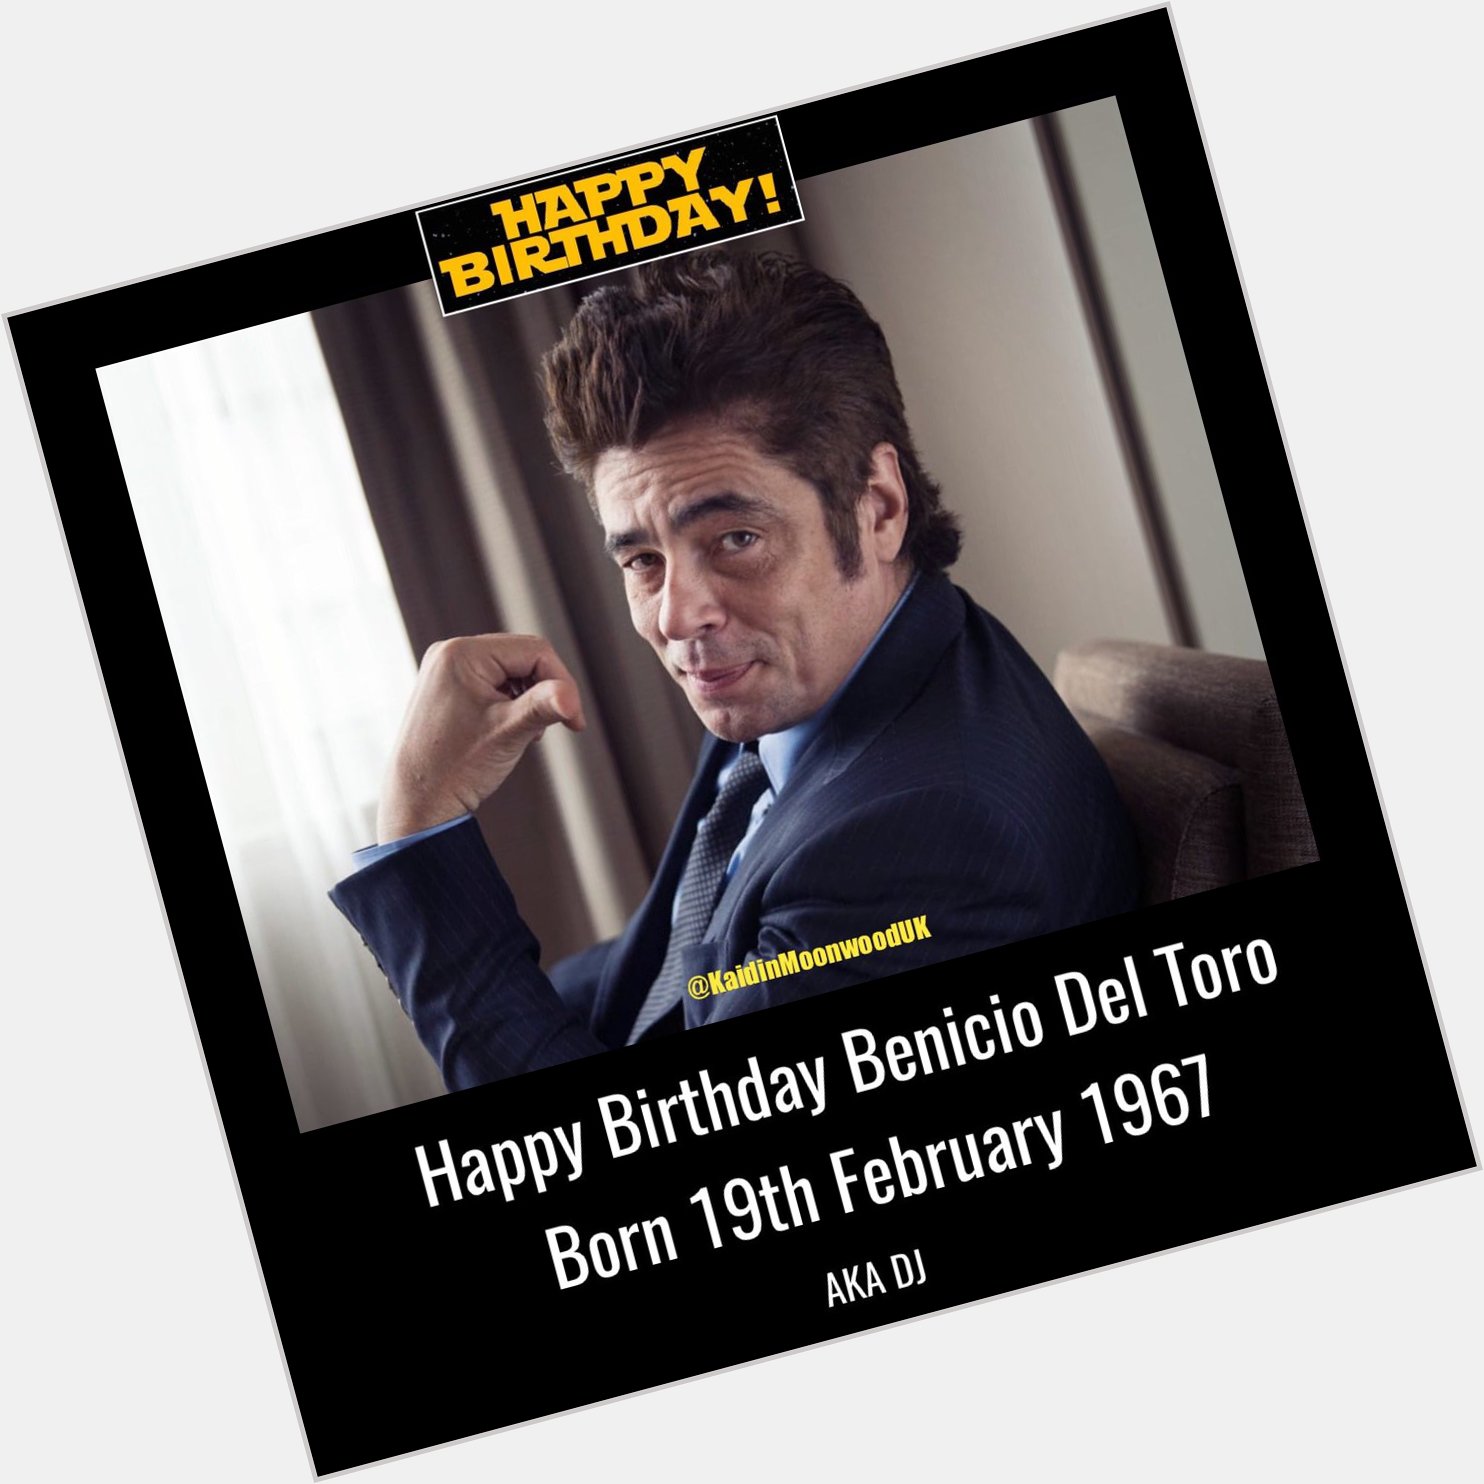 Happy Birthday Benicio Del Toro aka DJ. Born 19th February 1967.    